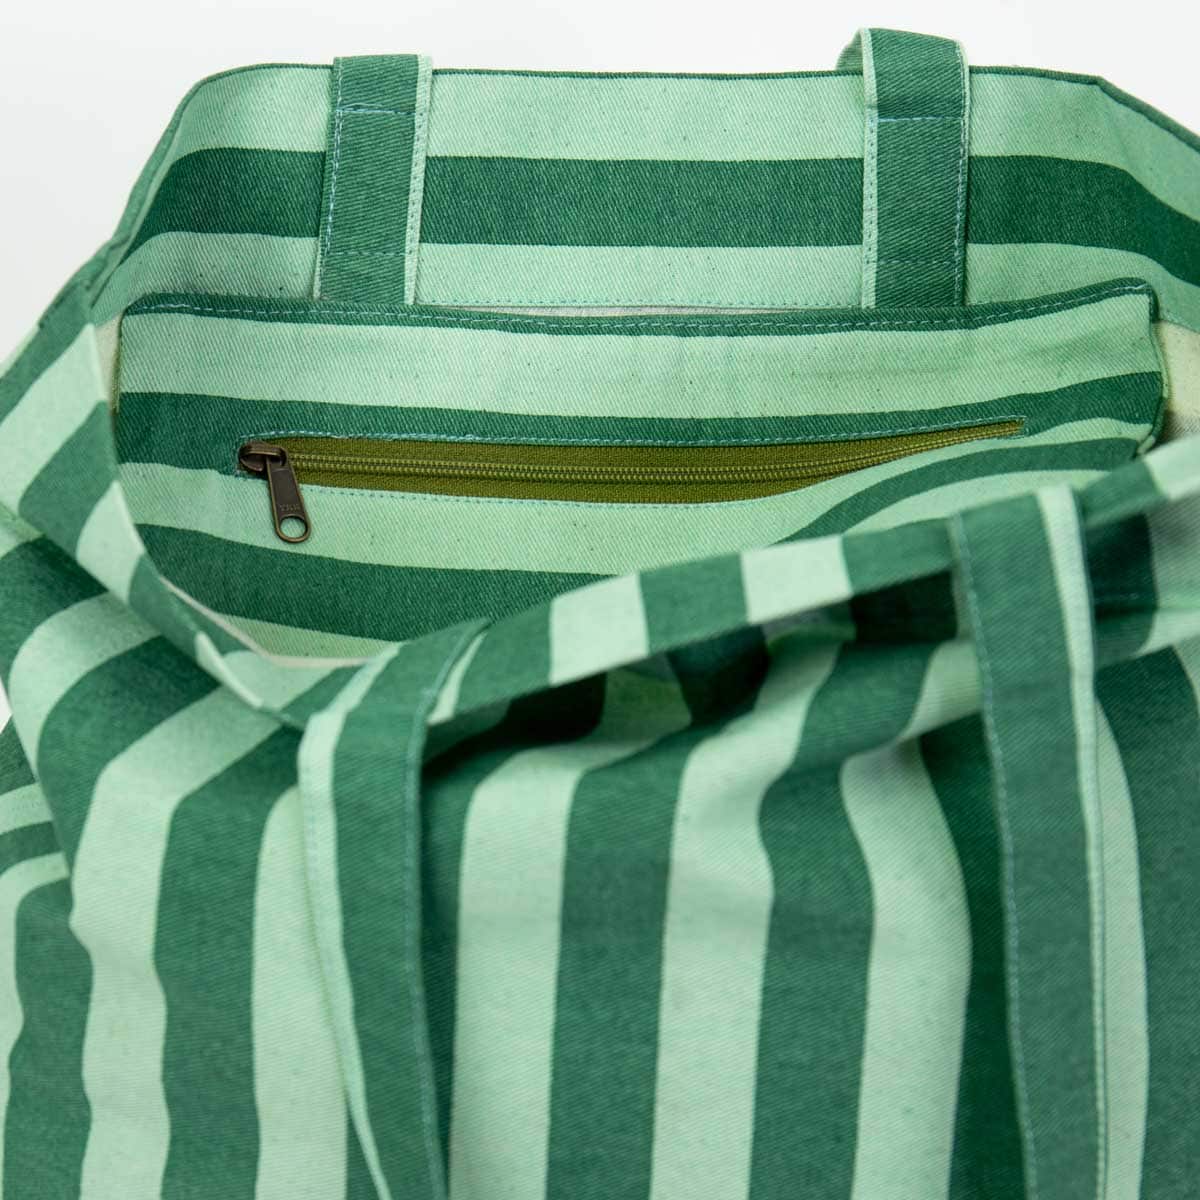 RANDA Bag, green